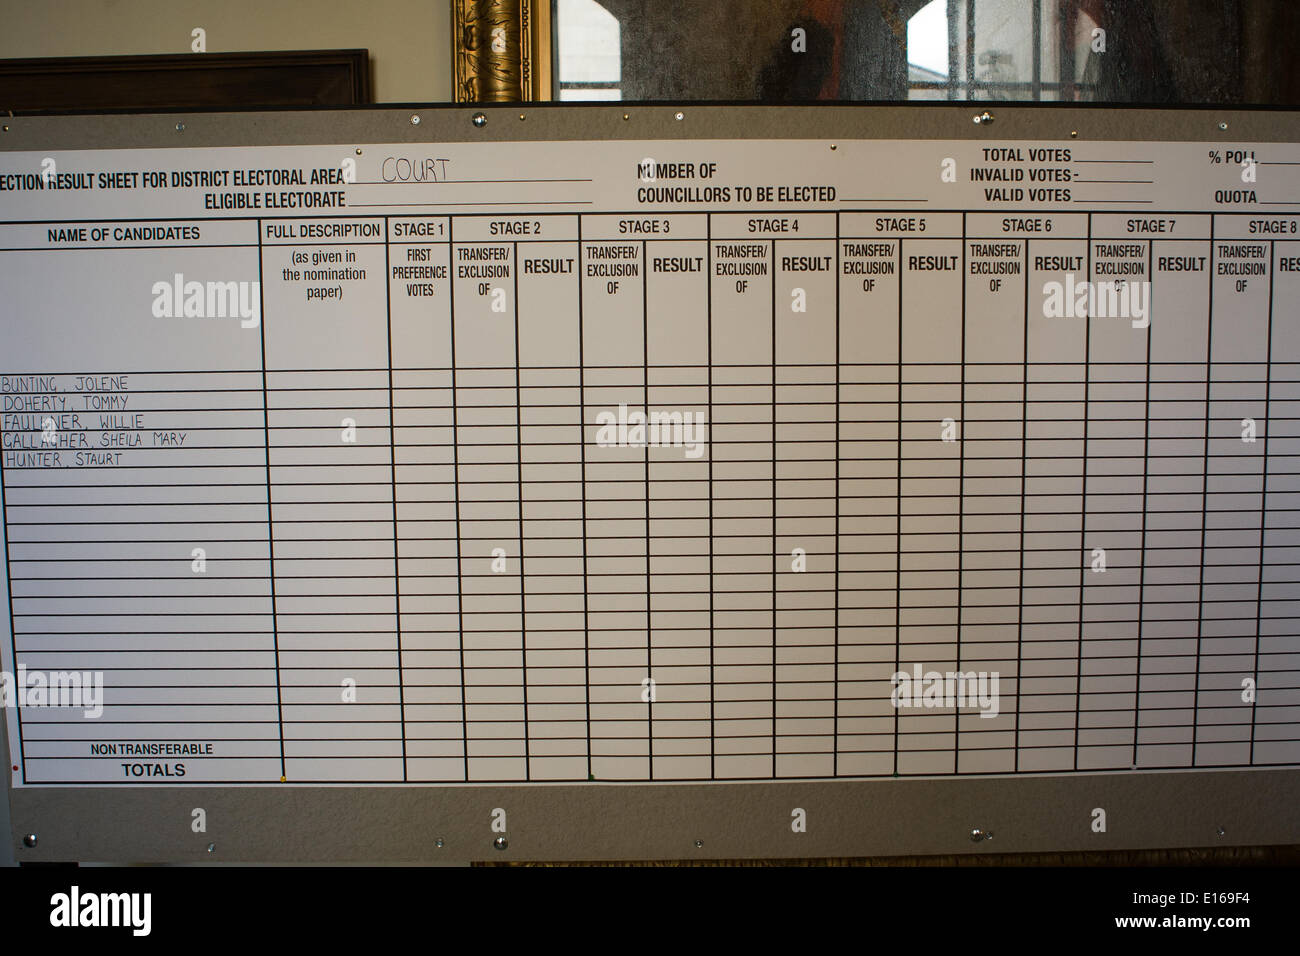 Belfast,UK 23rd May 2014 Court Ward blank Election Result Sheet Credit:  Bonzo/Alamy Live News Stock Photo